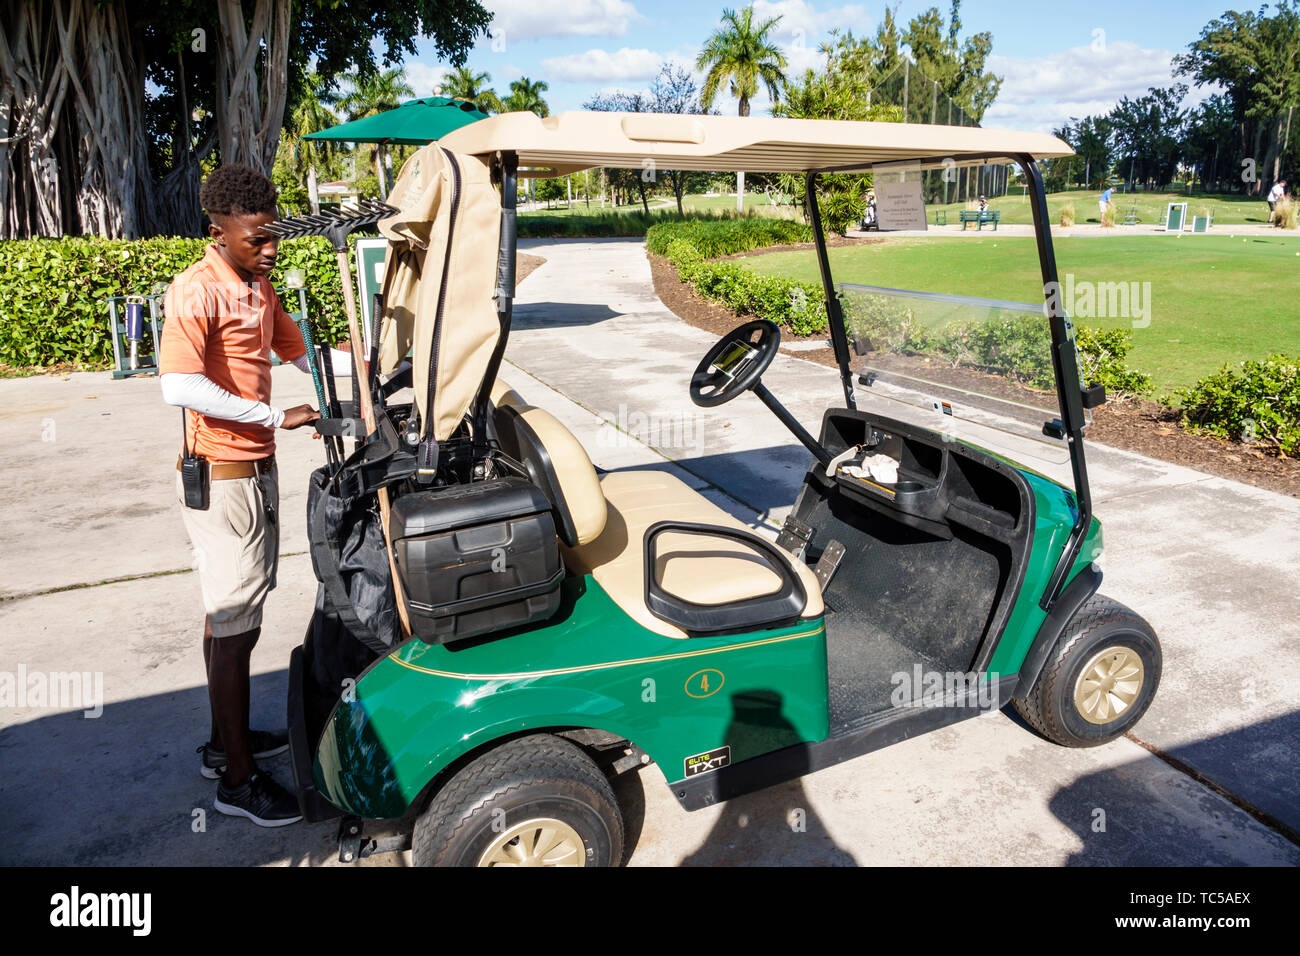 Miami Beach Florida,Normandy Shores Public Golf Club Course,Black man uomini maschio,antipasto,lavoro,lavoro lavoratori dipendenti dipendenti lavoratori dipendenti,servizio,elec Foto Stock